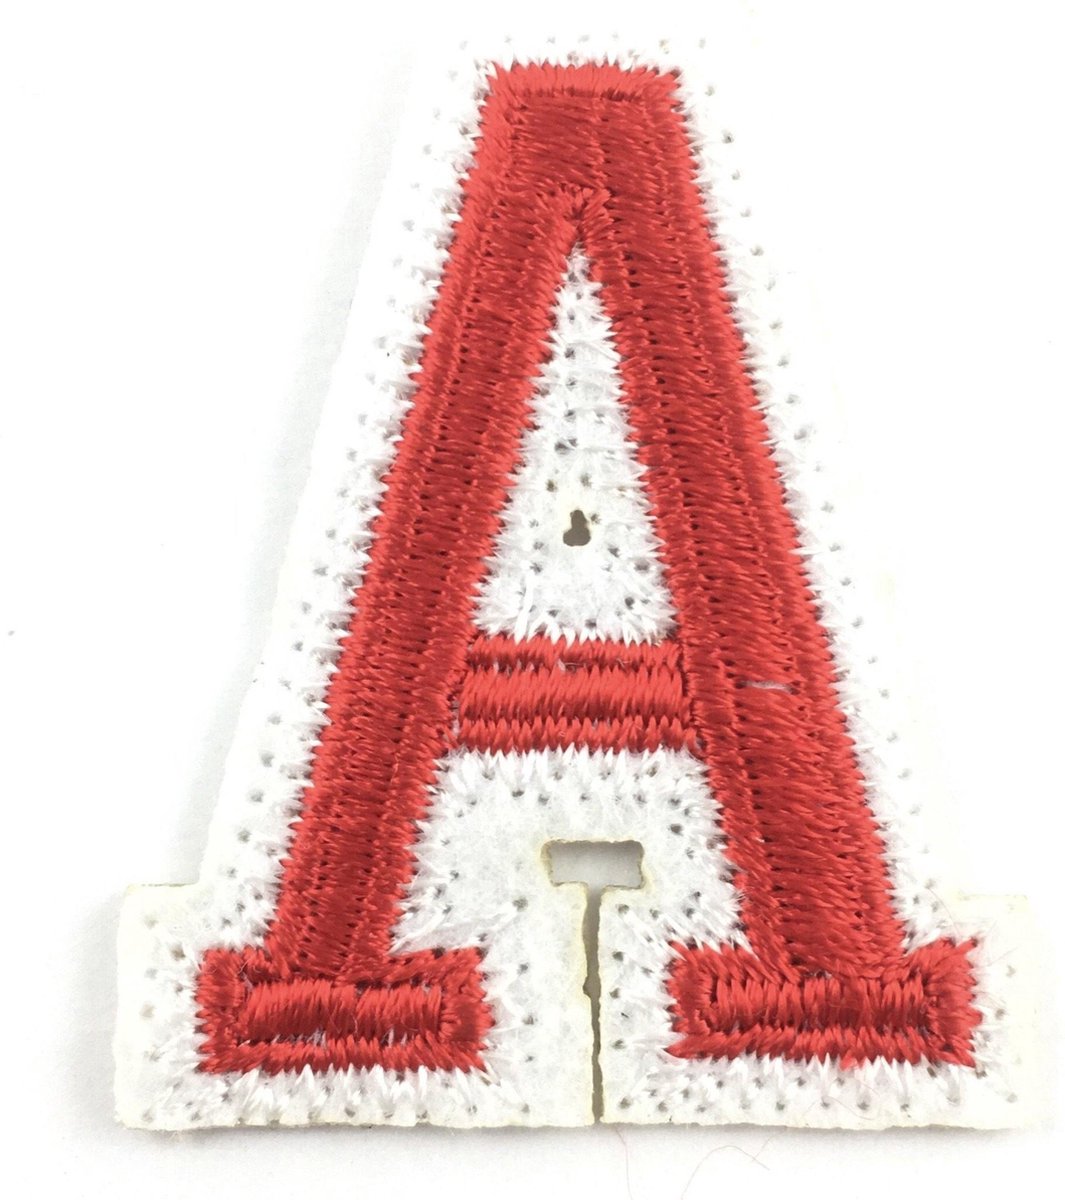 Afbeelding van product Merkloos / Sans marque  Alfabet Letter Embleem Strijk Patch Rood Wit 4,5 x 3,5 cm / Letter A